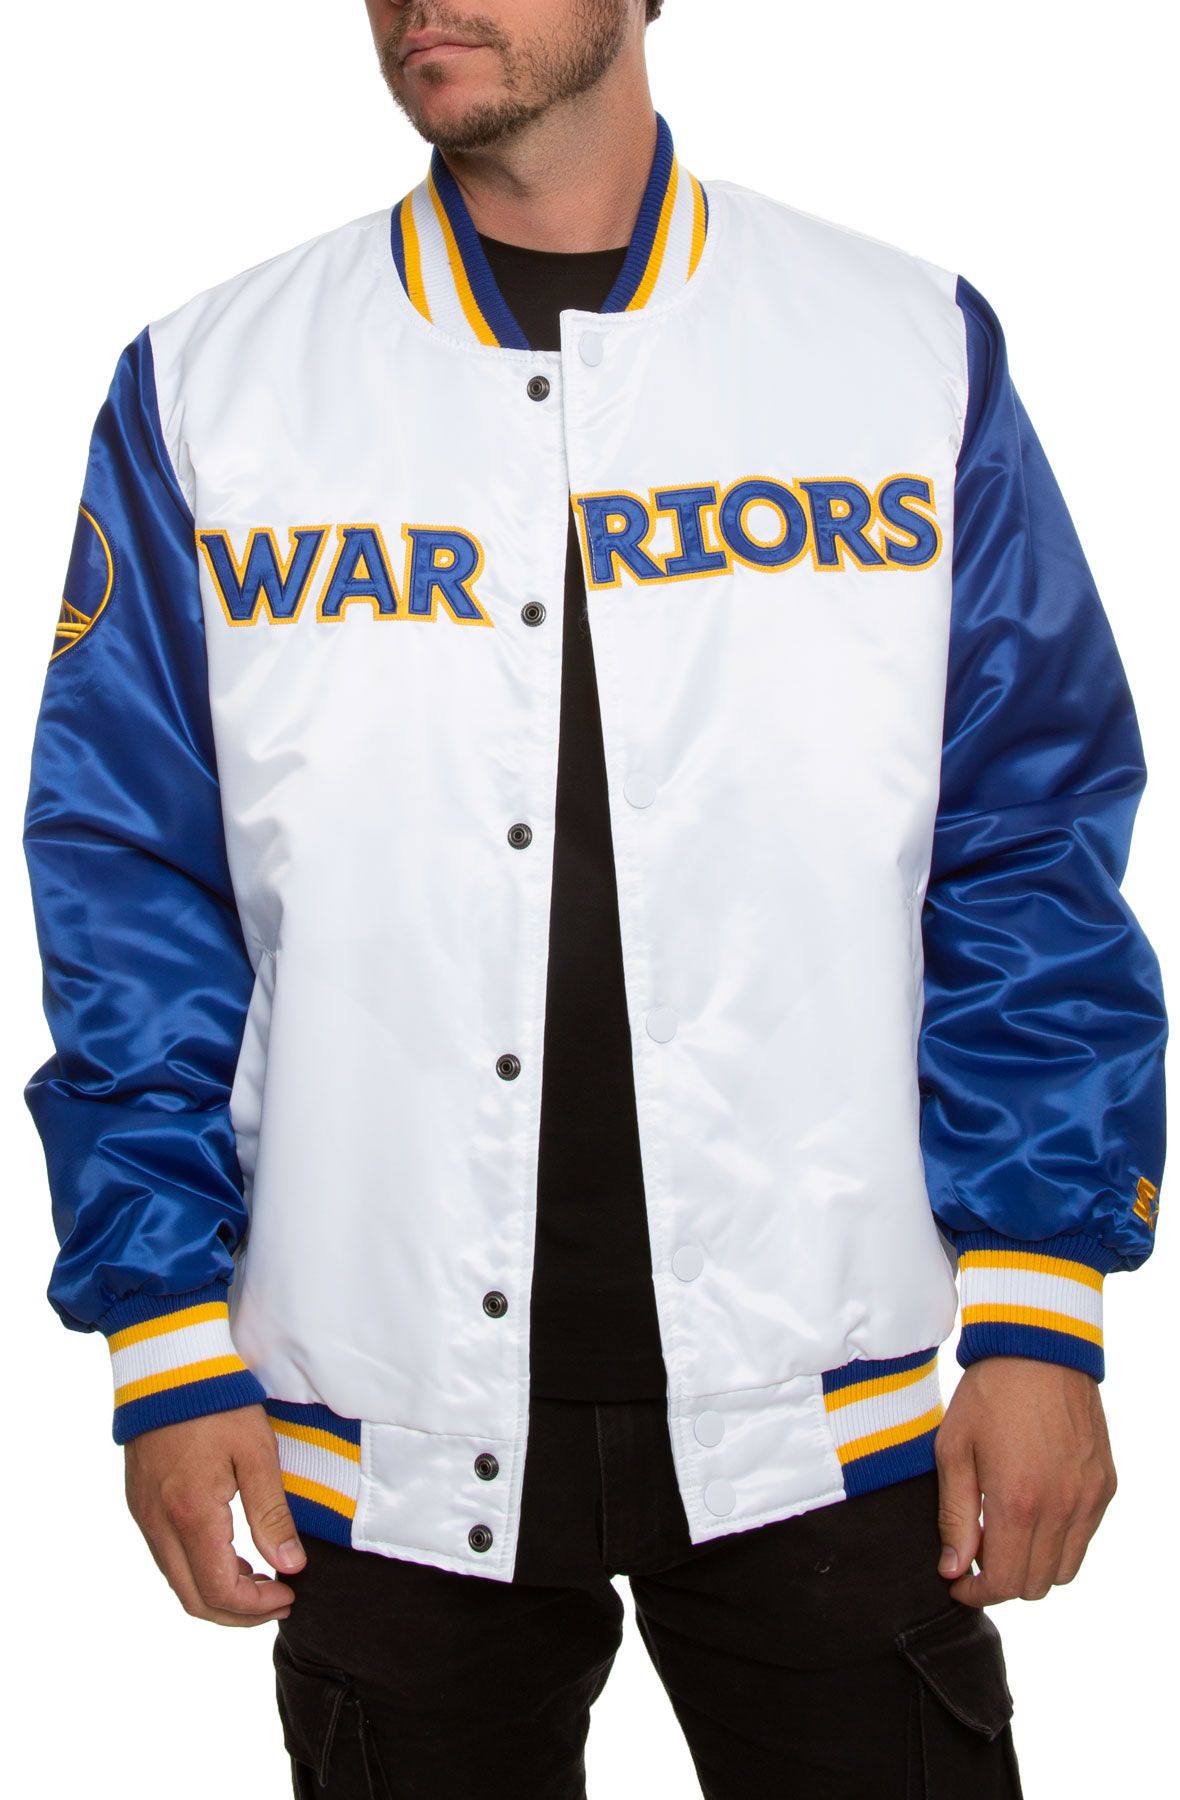 warriors jacket